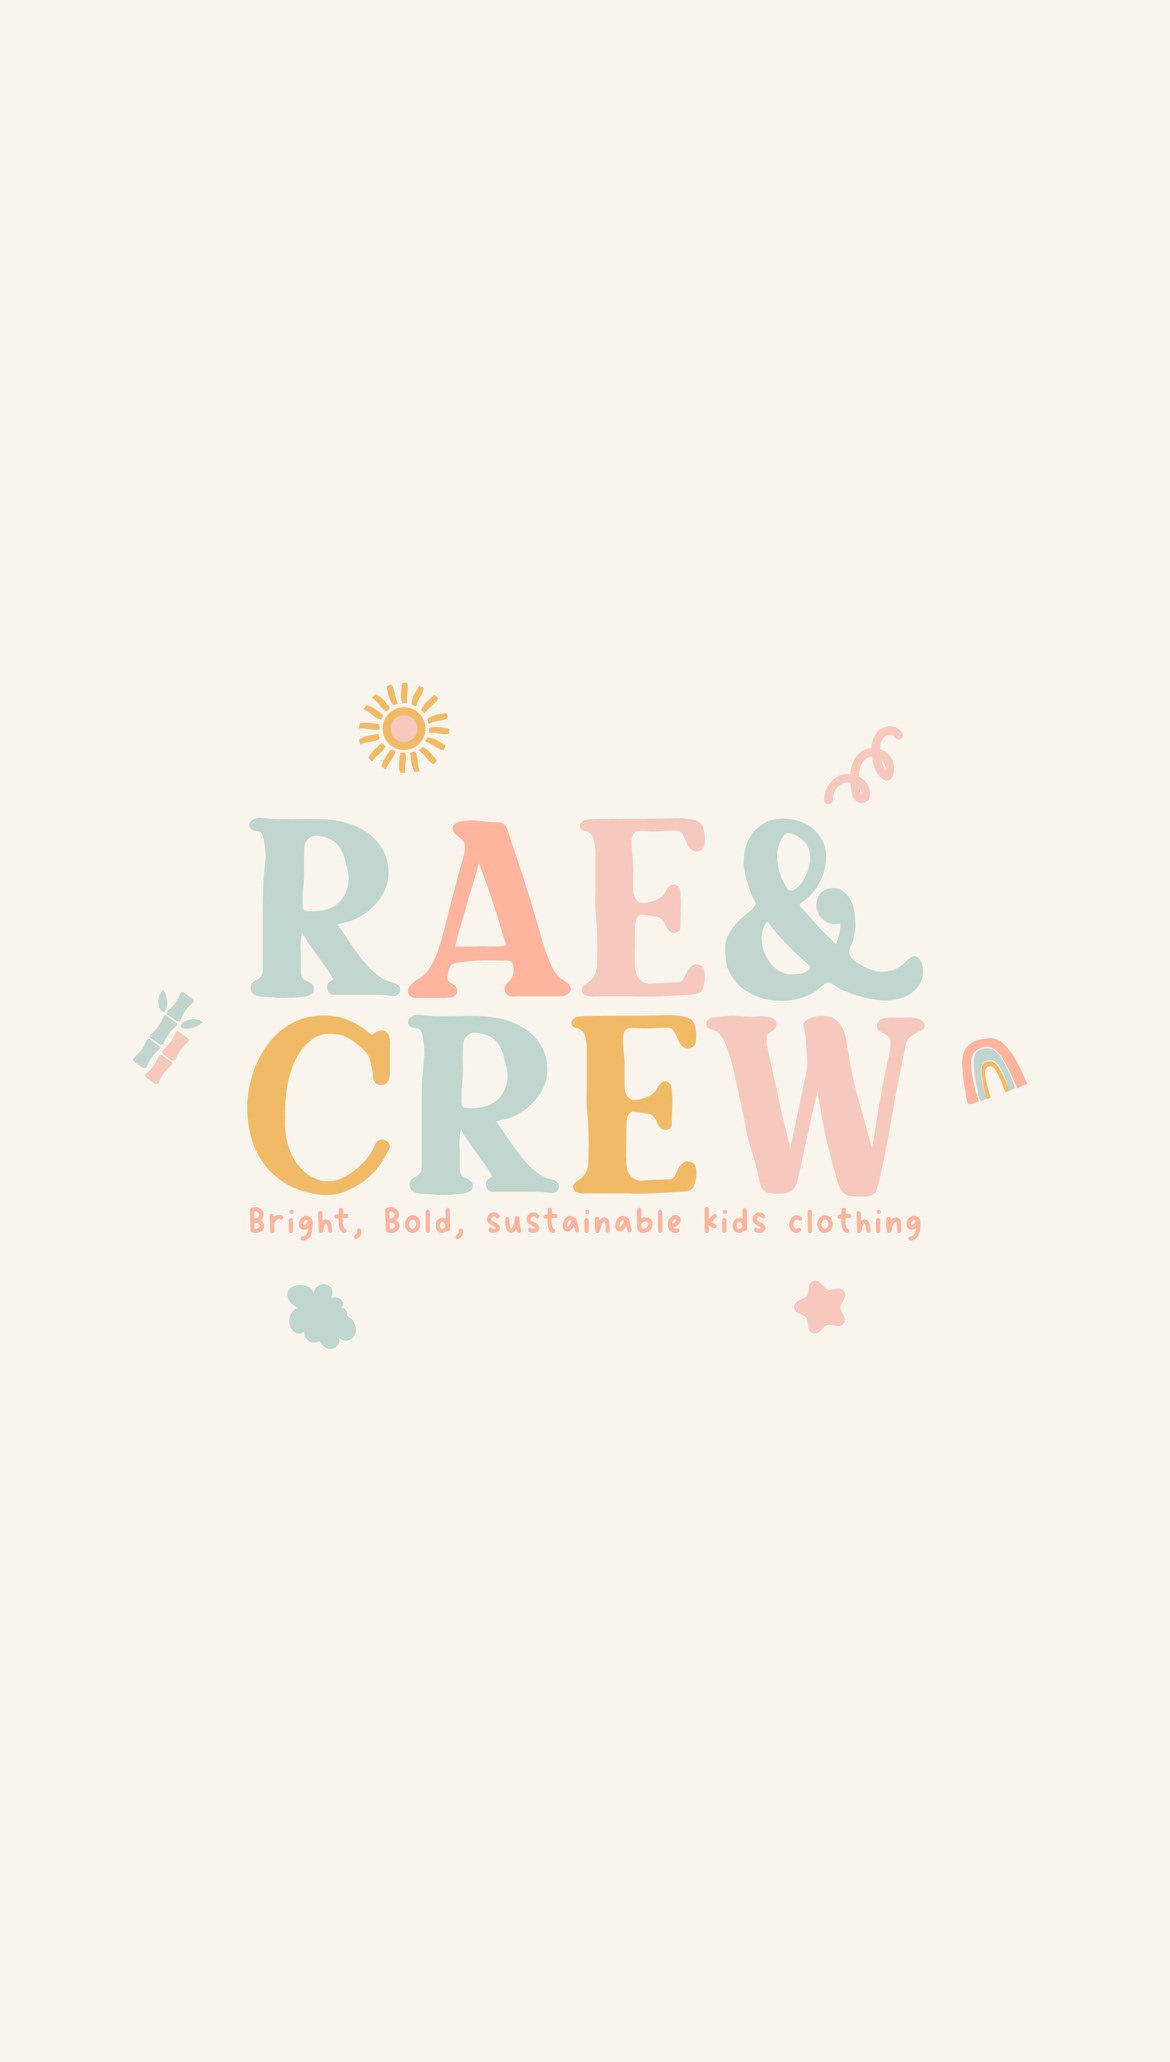 Rae & Crew Baby clothes brand